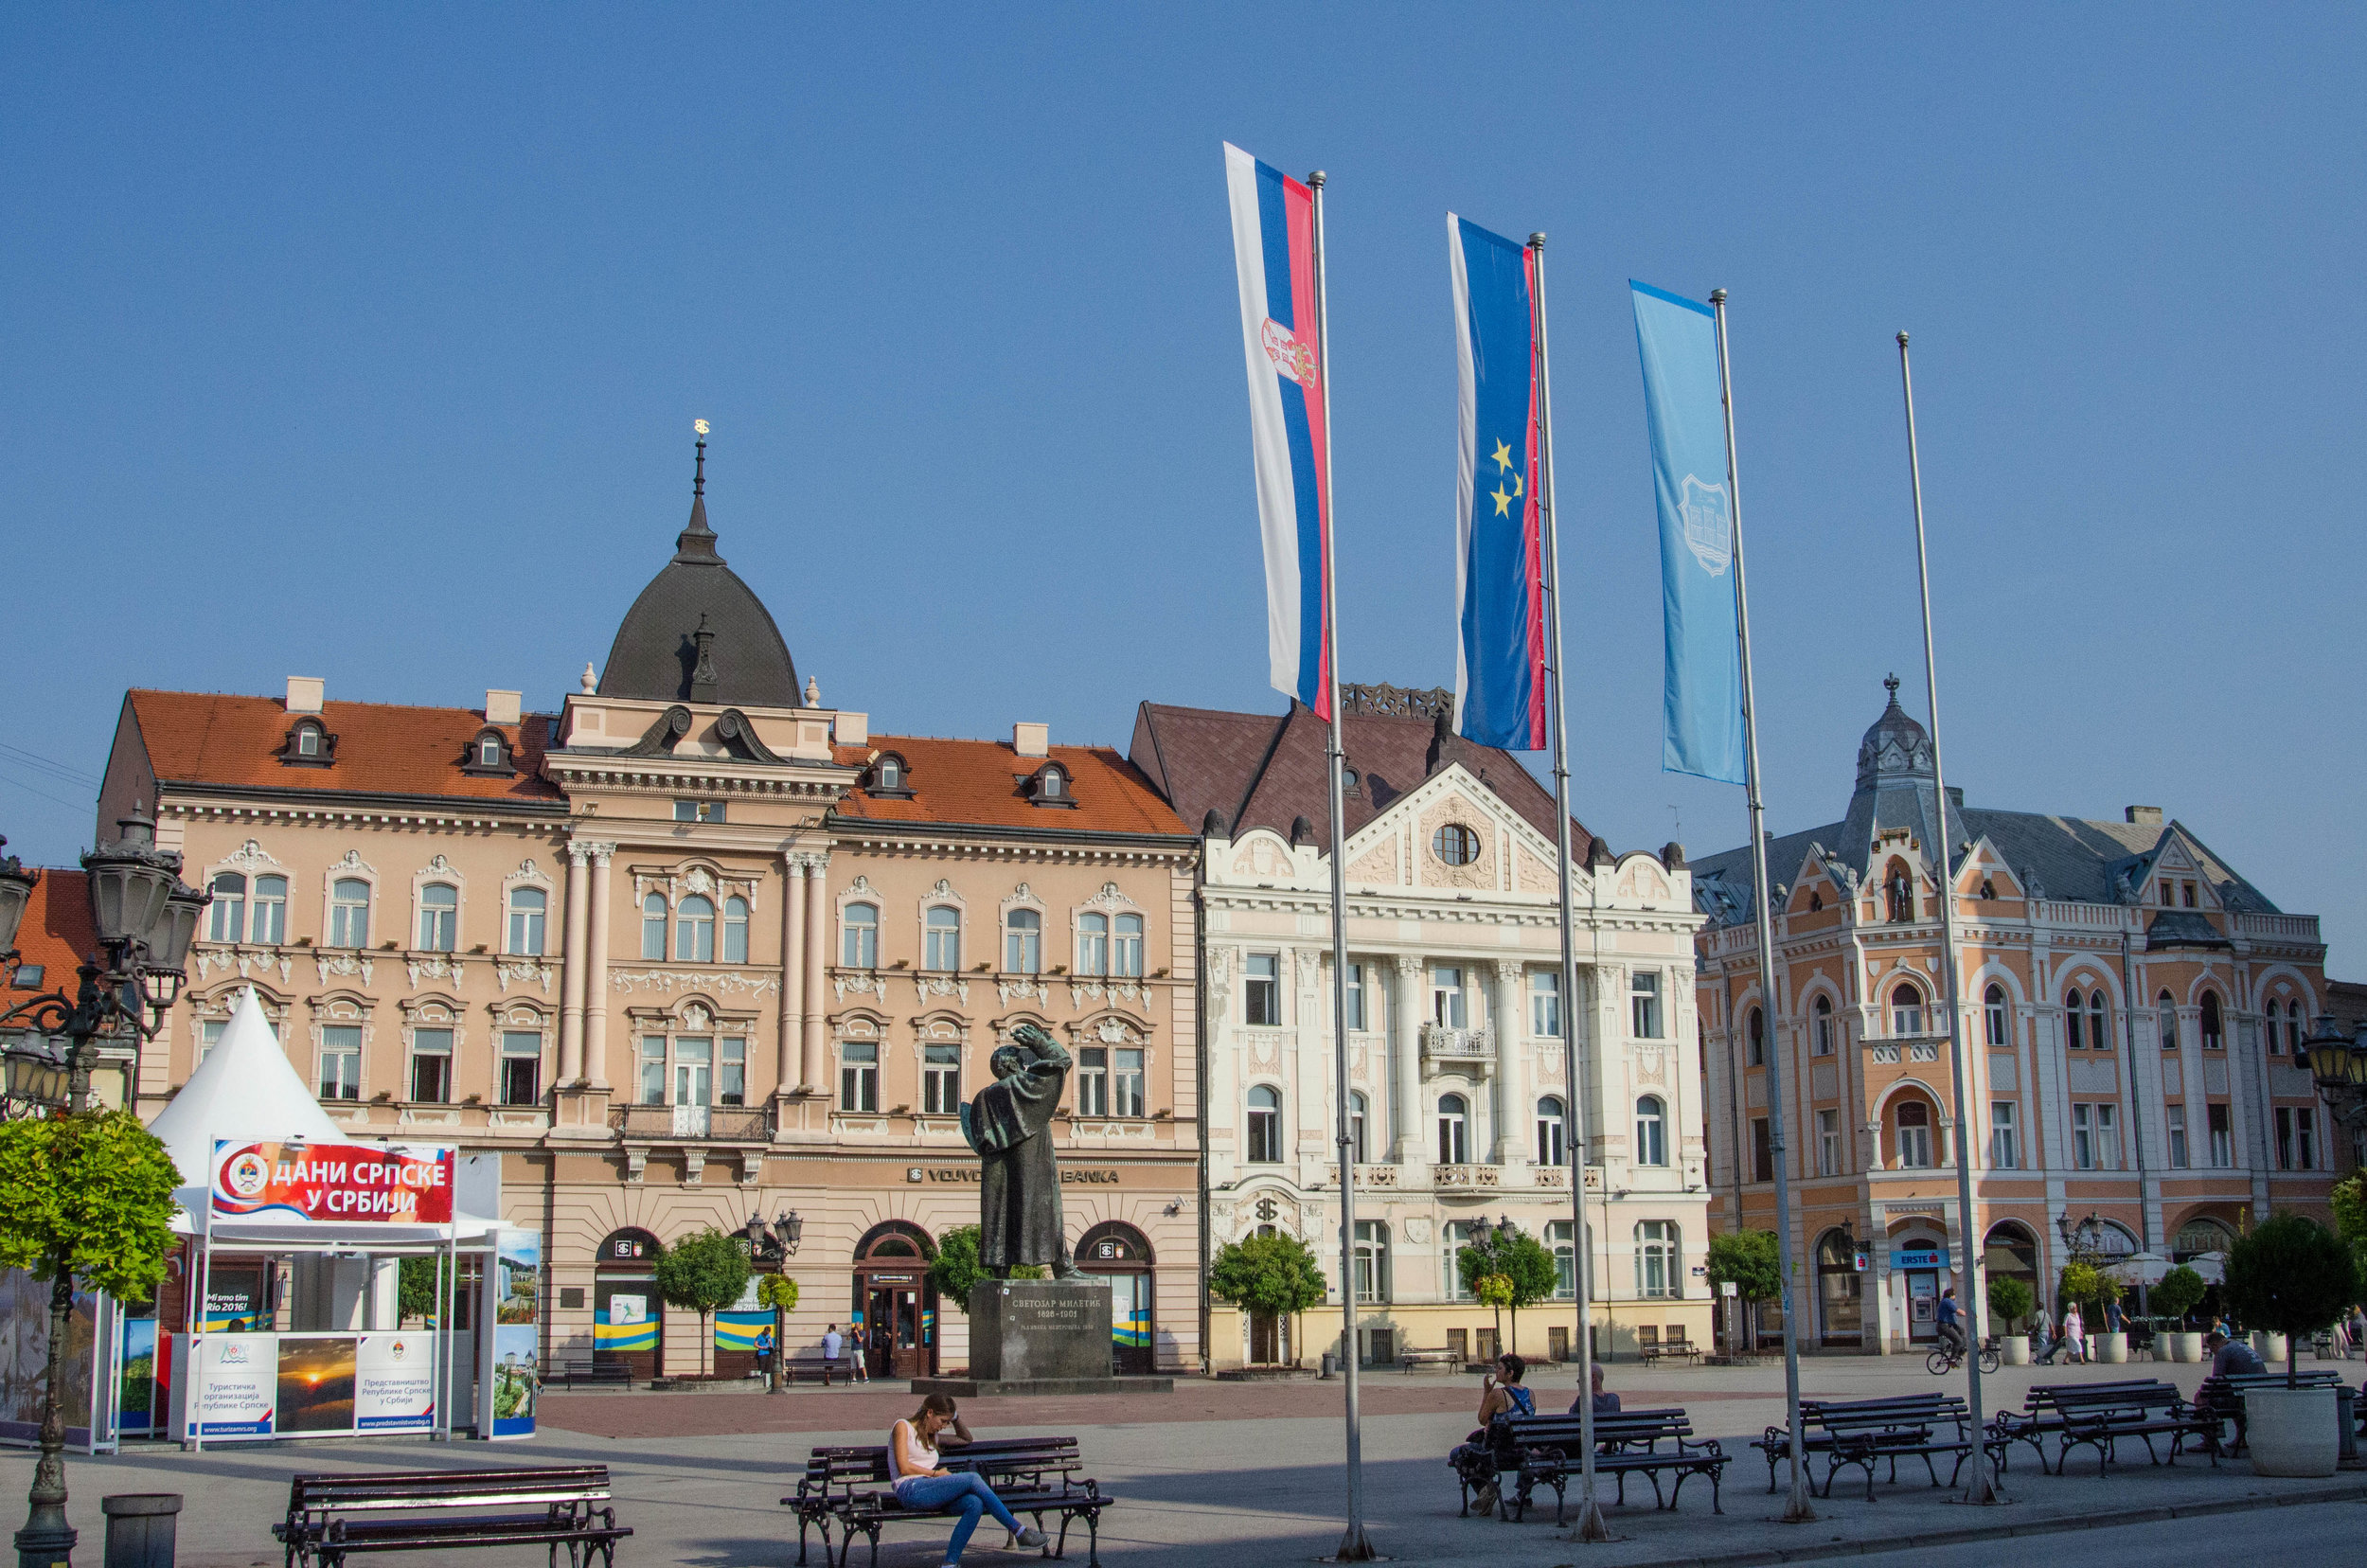 Old town square, Novi Sad, Serbia